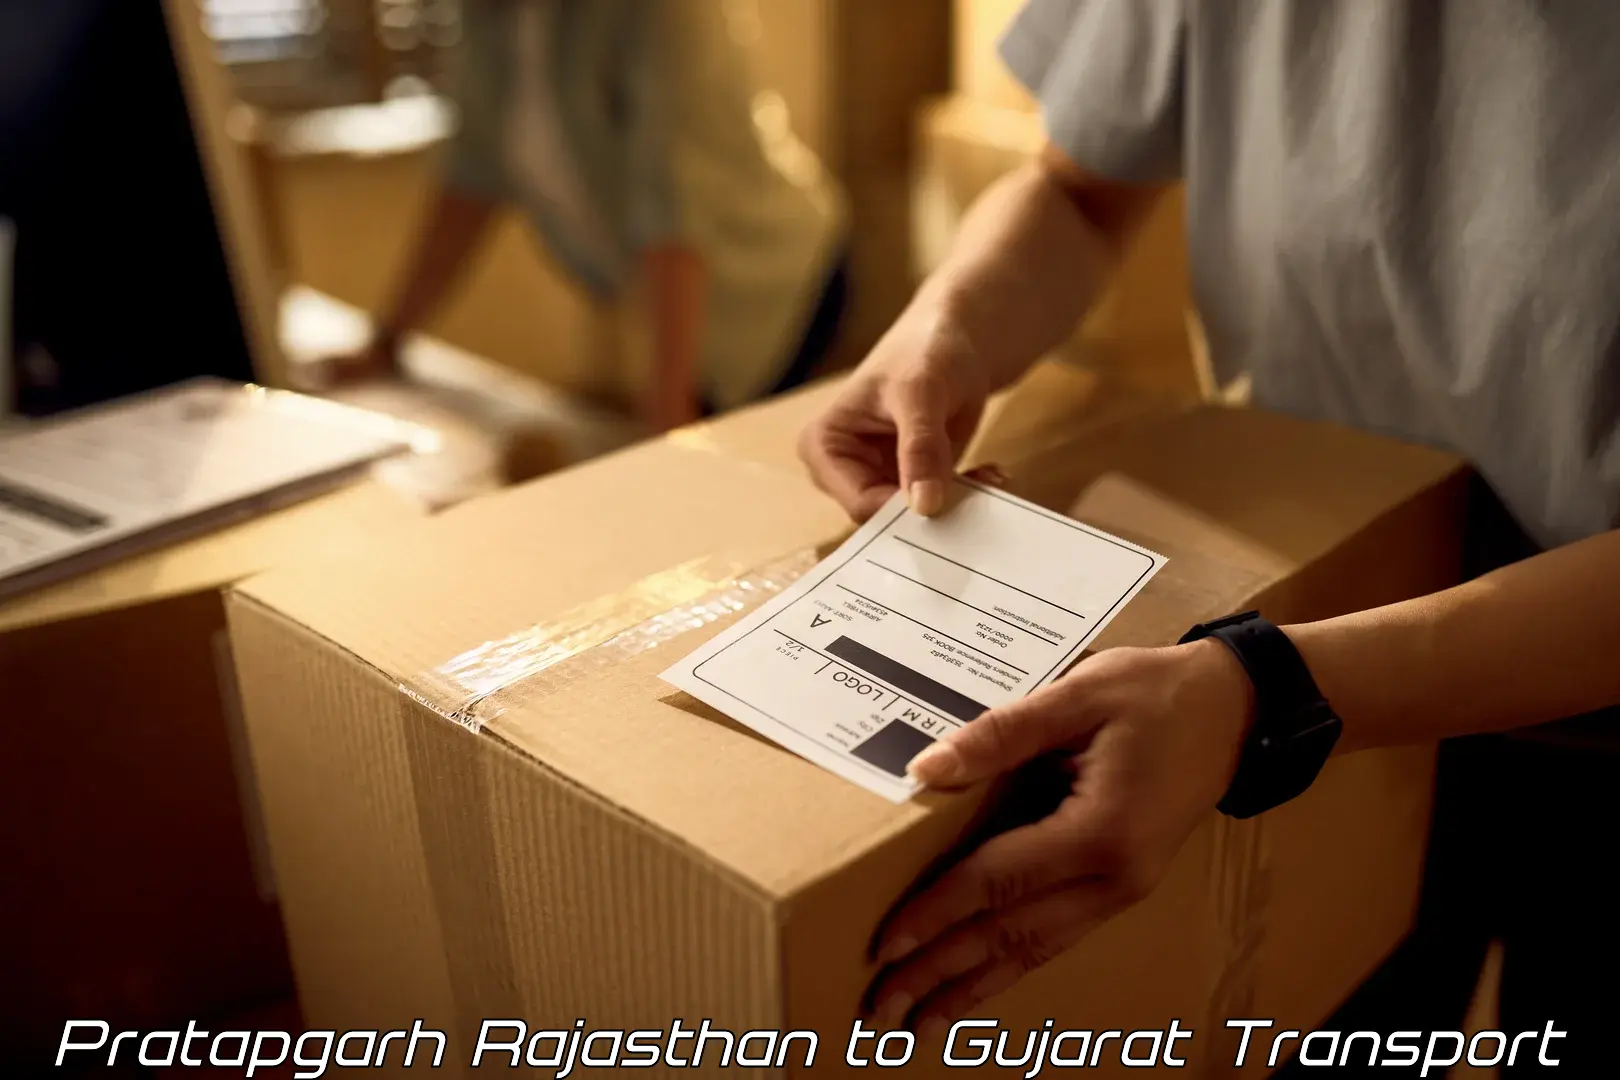 Air freight transport services Pratapgarh Rajasthan to GIDC